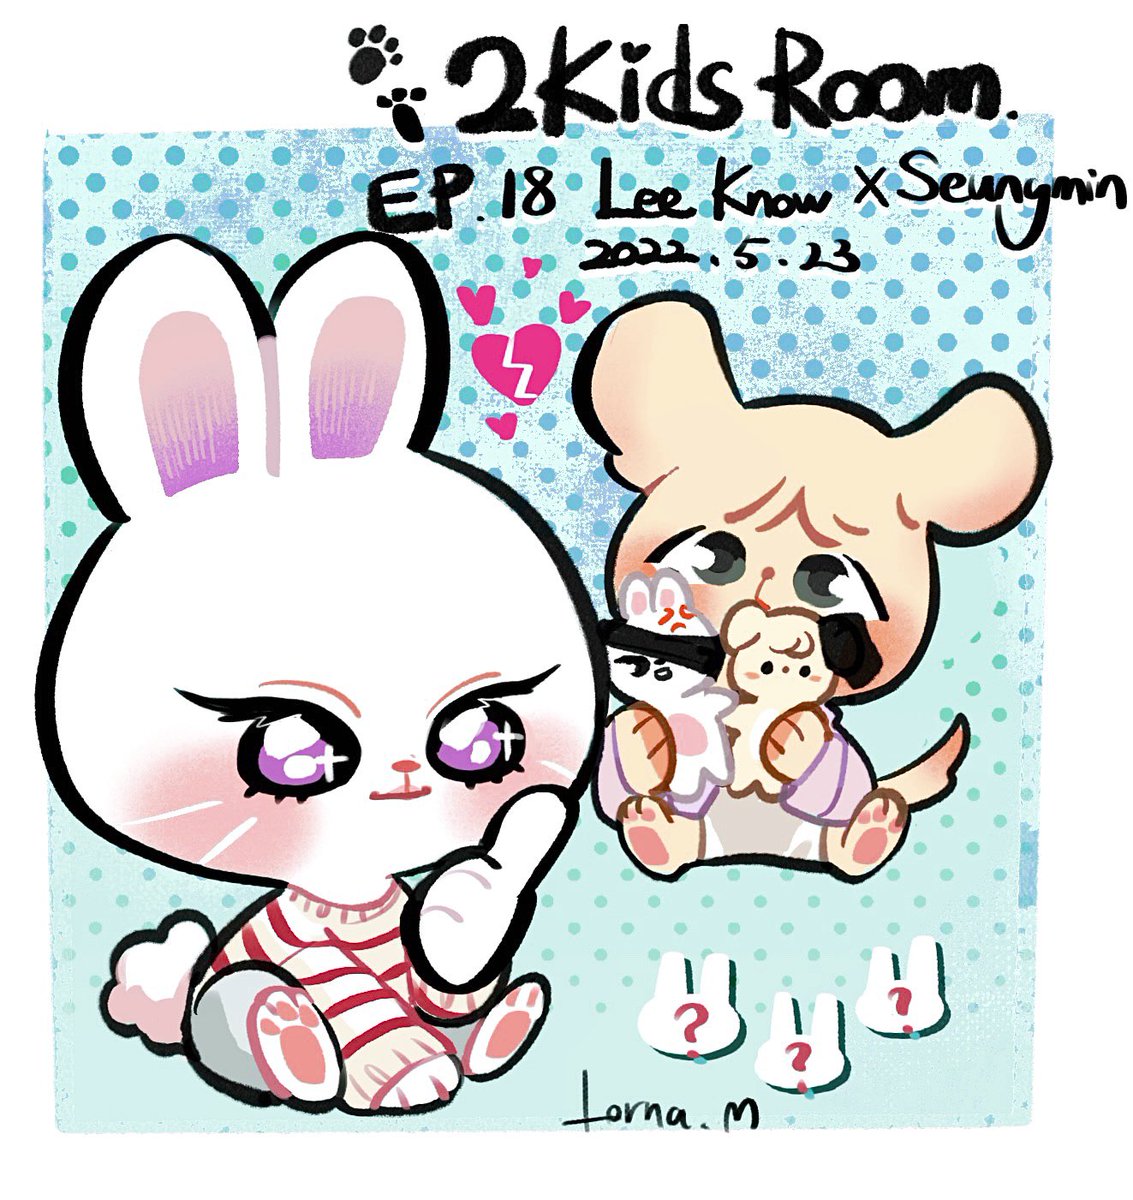 2kids room ep.18🐱🐱🐱
#straykids   #skzoo
#LeeKnow #Seungmin 